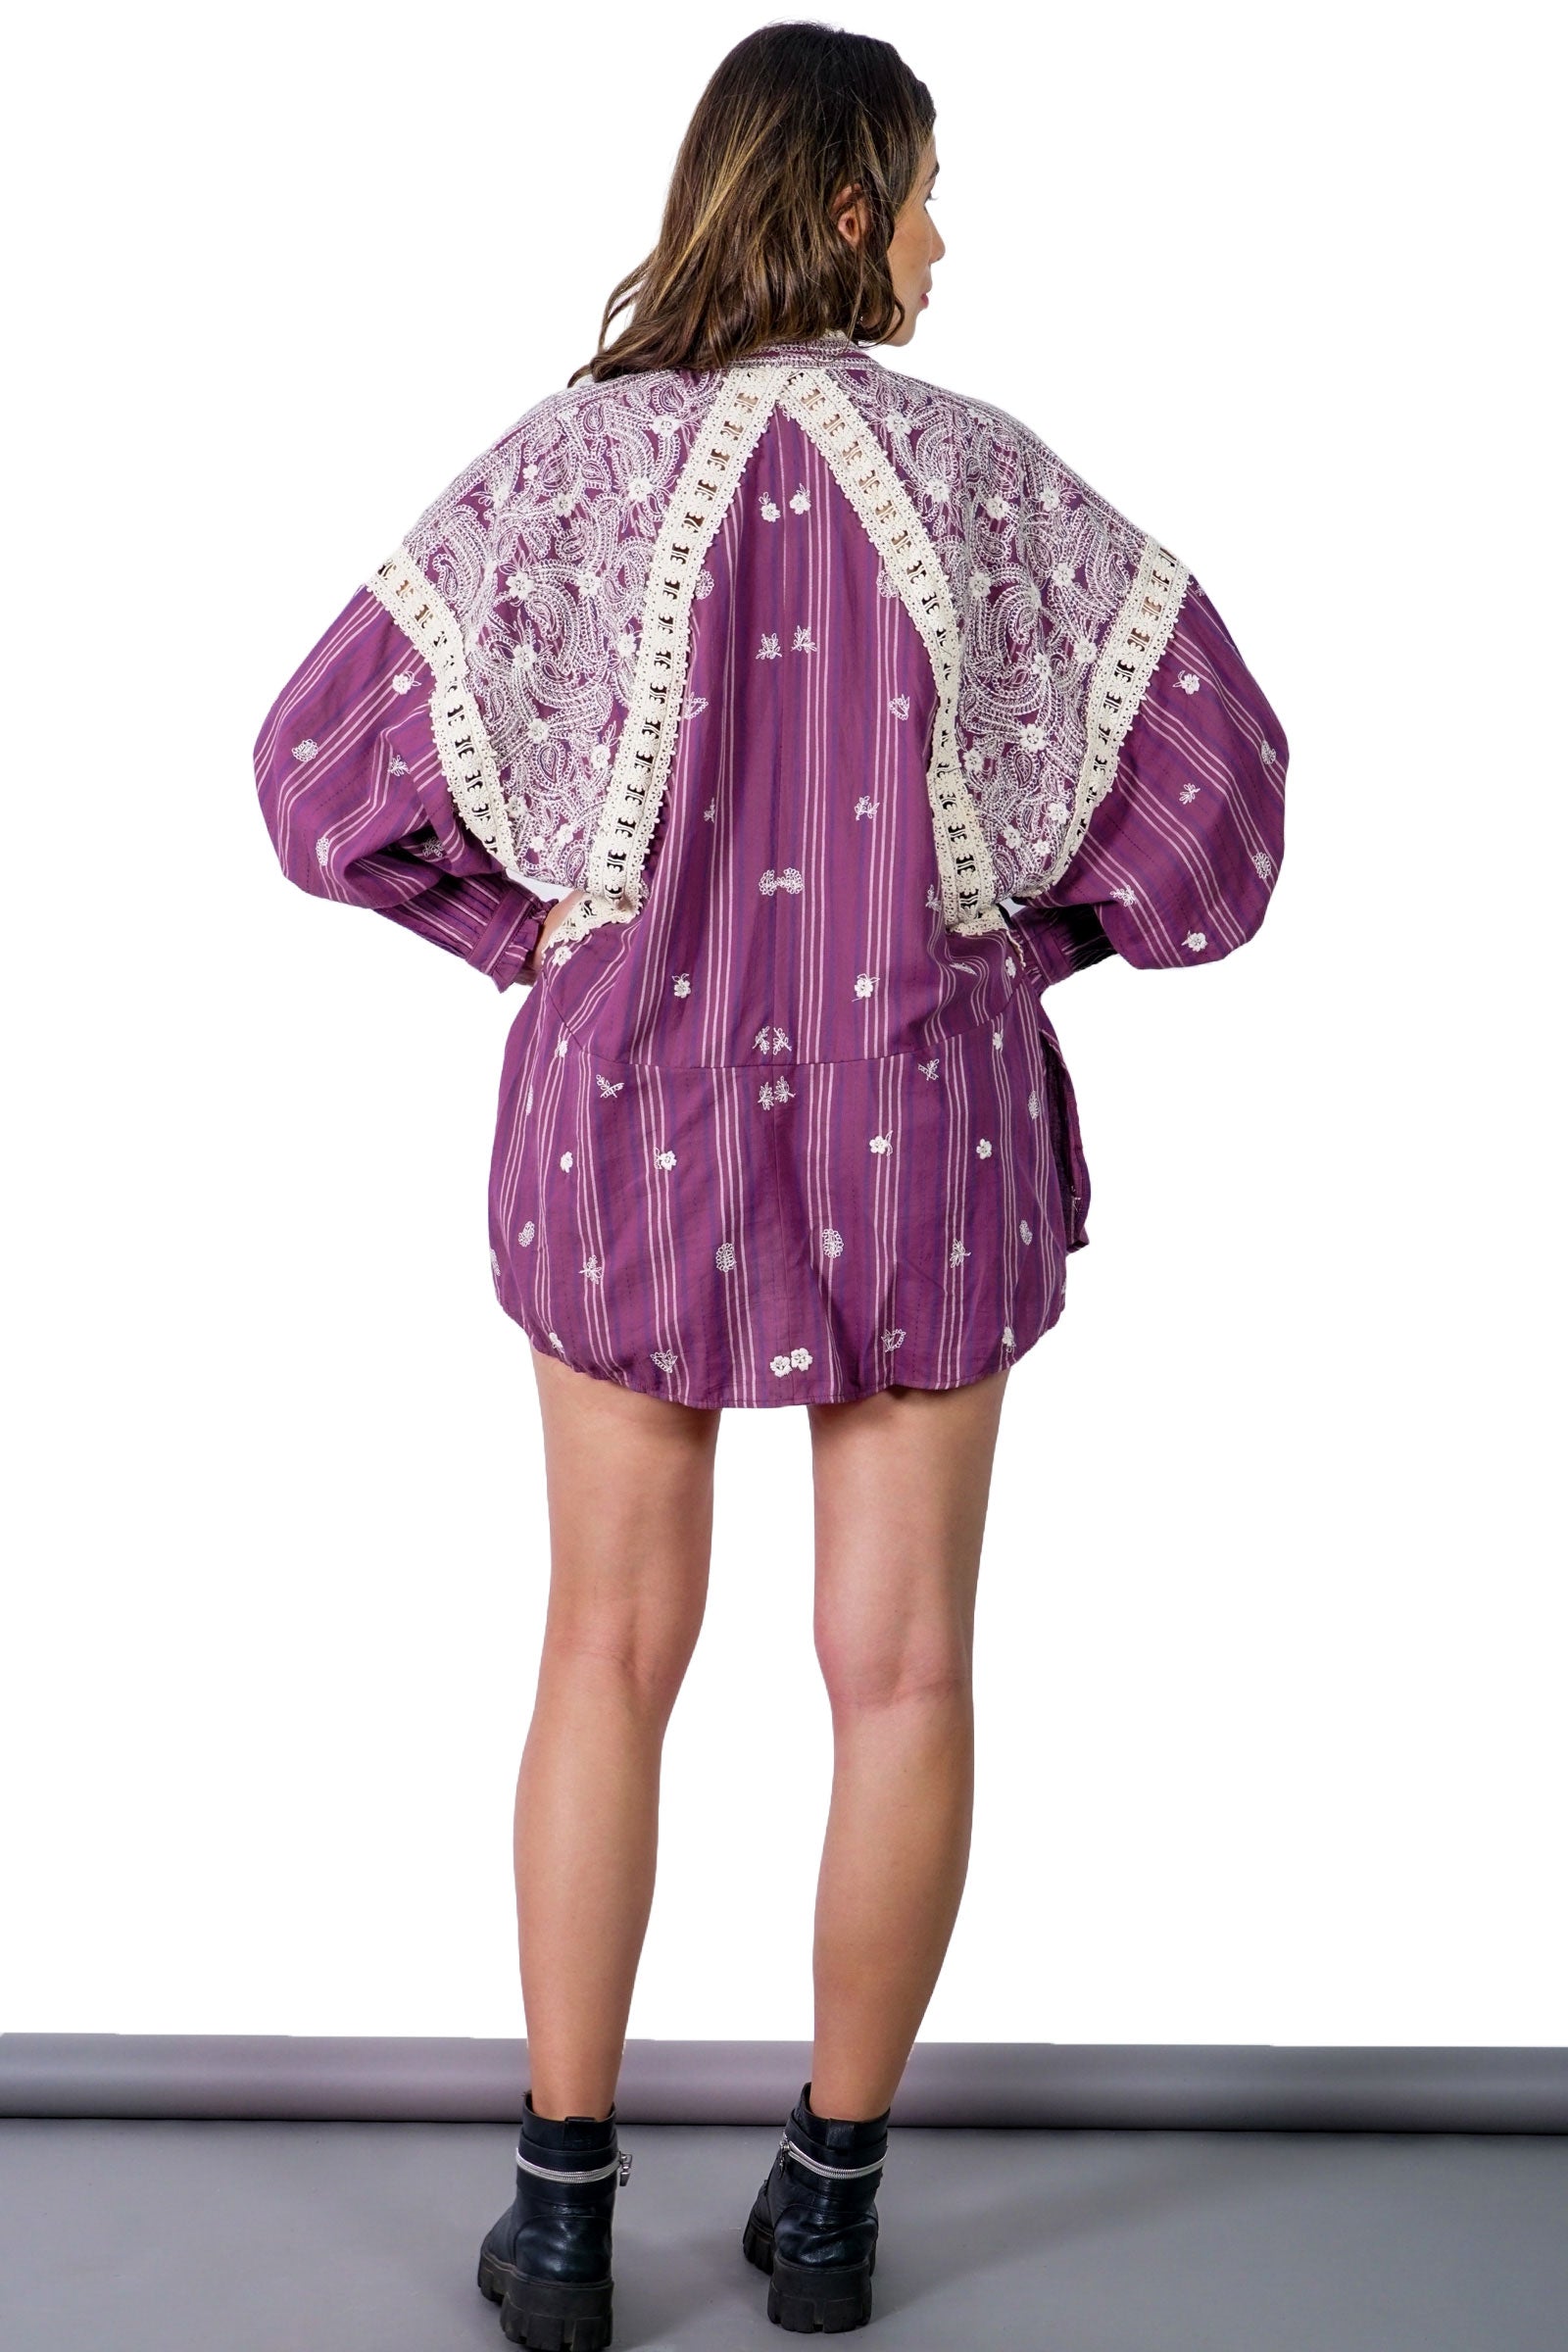 Ava Embroidered Kimono / Shrug (Limited Stock)